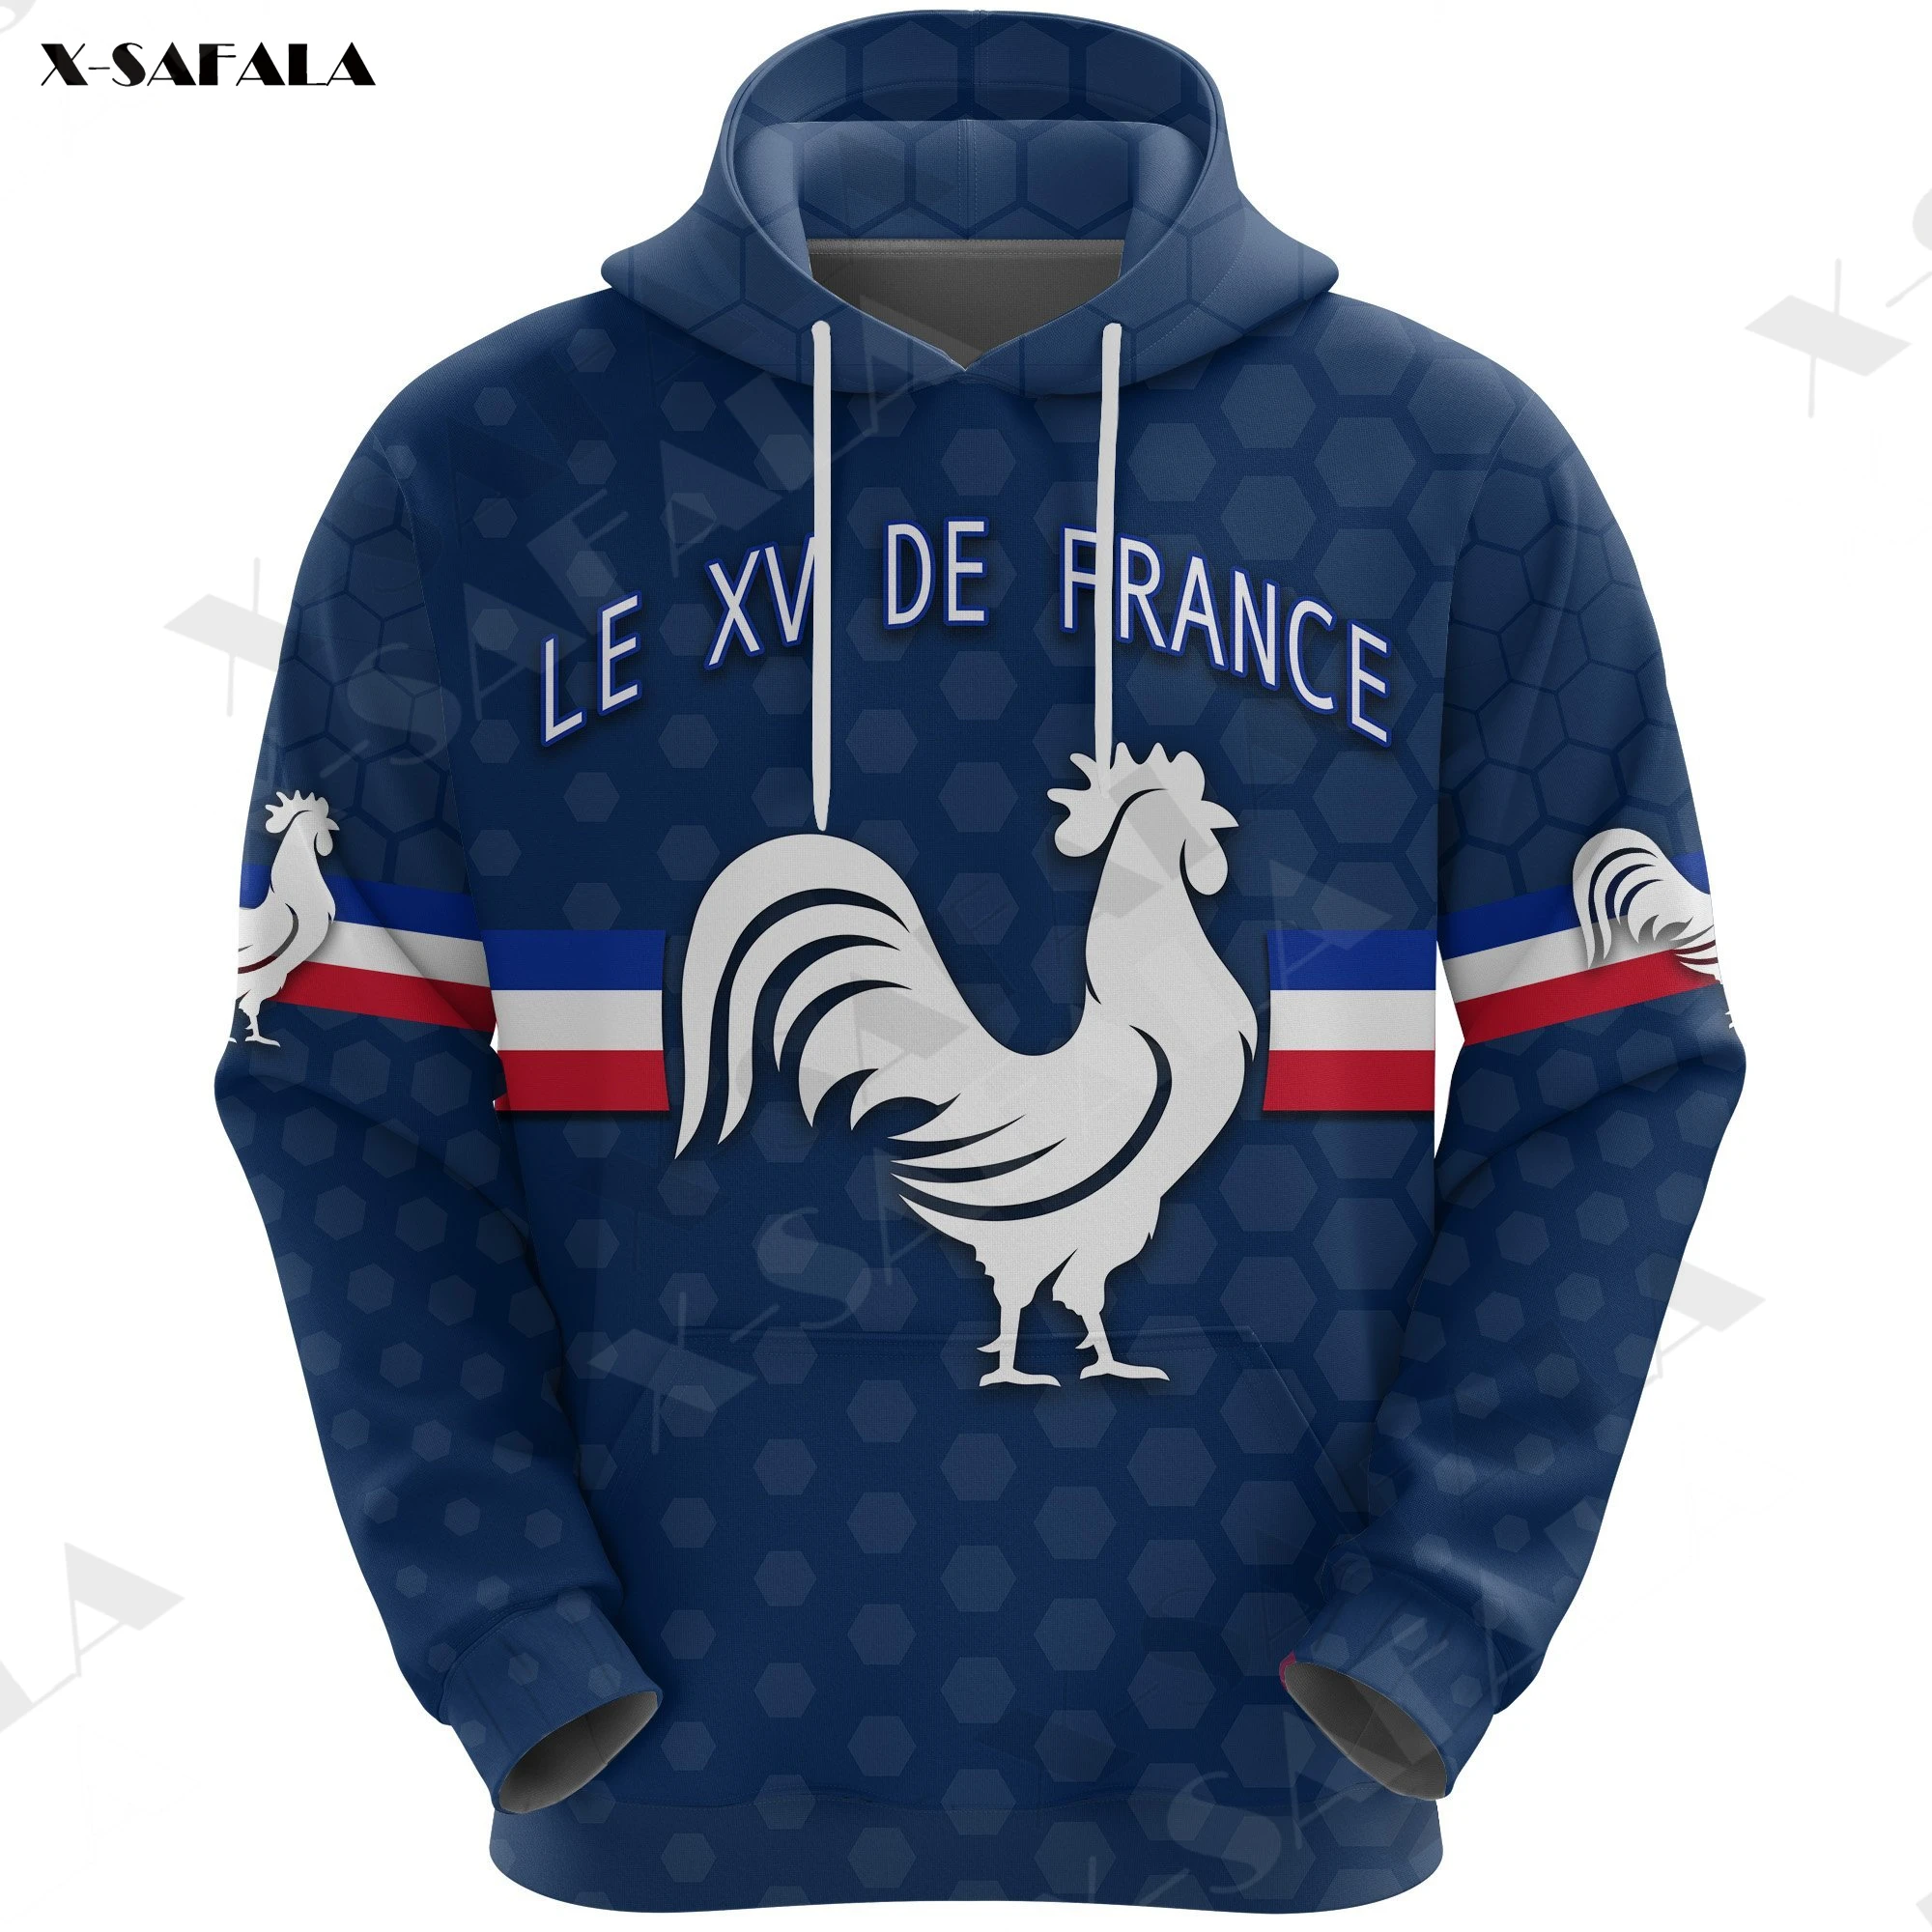 

Custom Text Rugby Le XV De France Brush 3D Print Zipper Hoodie Men Pullover Sweatshirt Hooded Jersey Tracksuits Outwear Coat